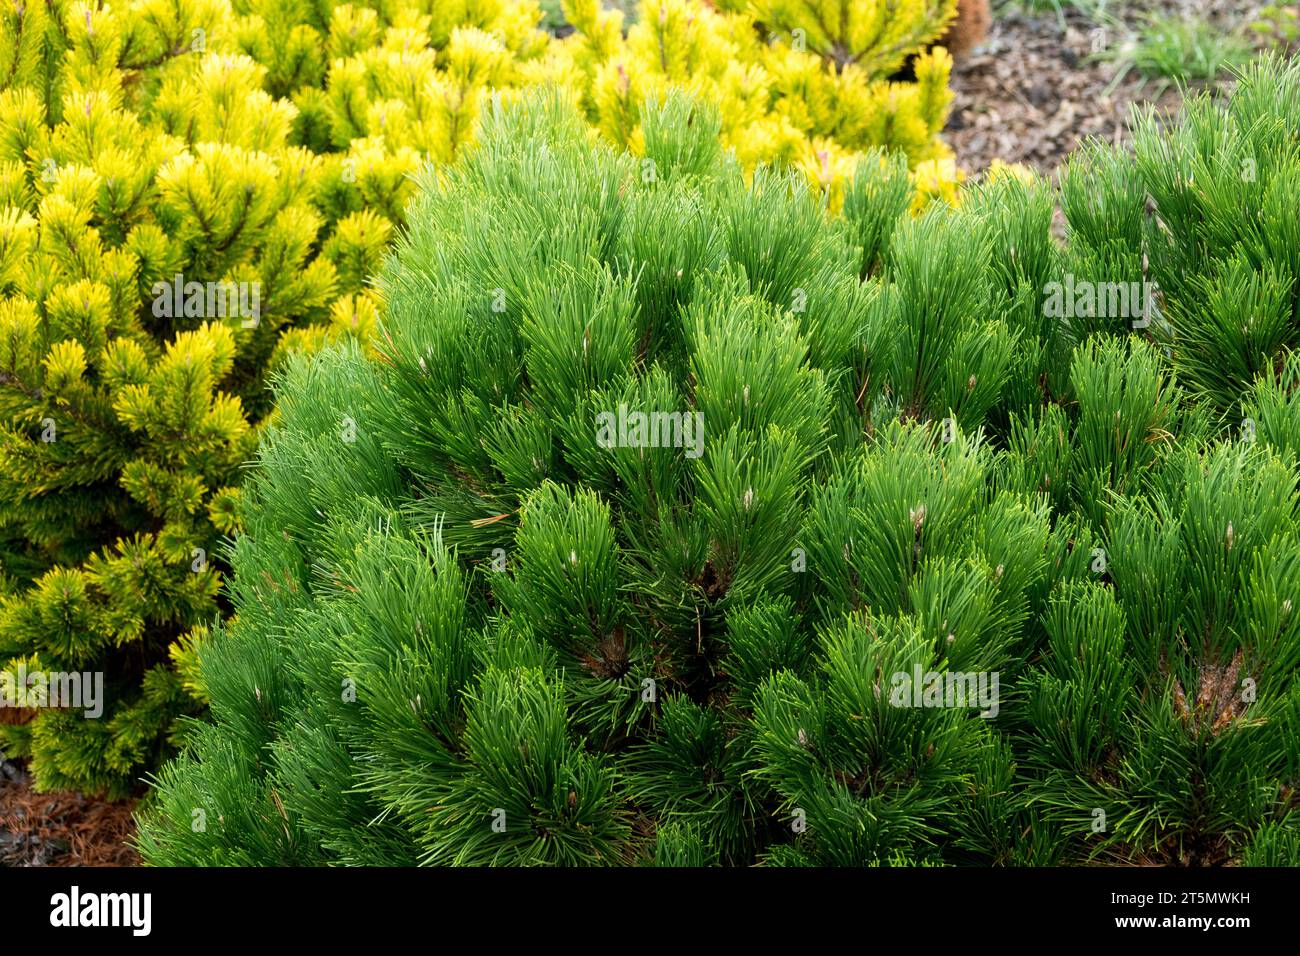 Aghi europei di pino nero Pinus nigra conifere piante di pino giardino Foliage Pinus nigra "Black Prince" austriaco Pino Conifer Pinus basso Foto Stock